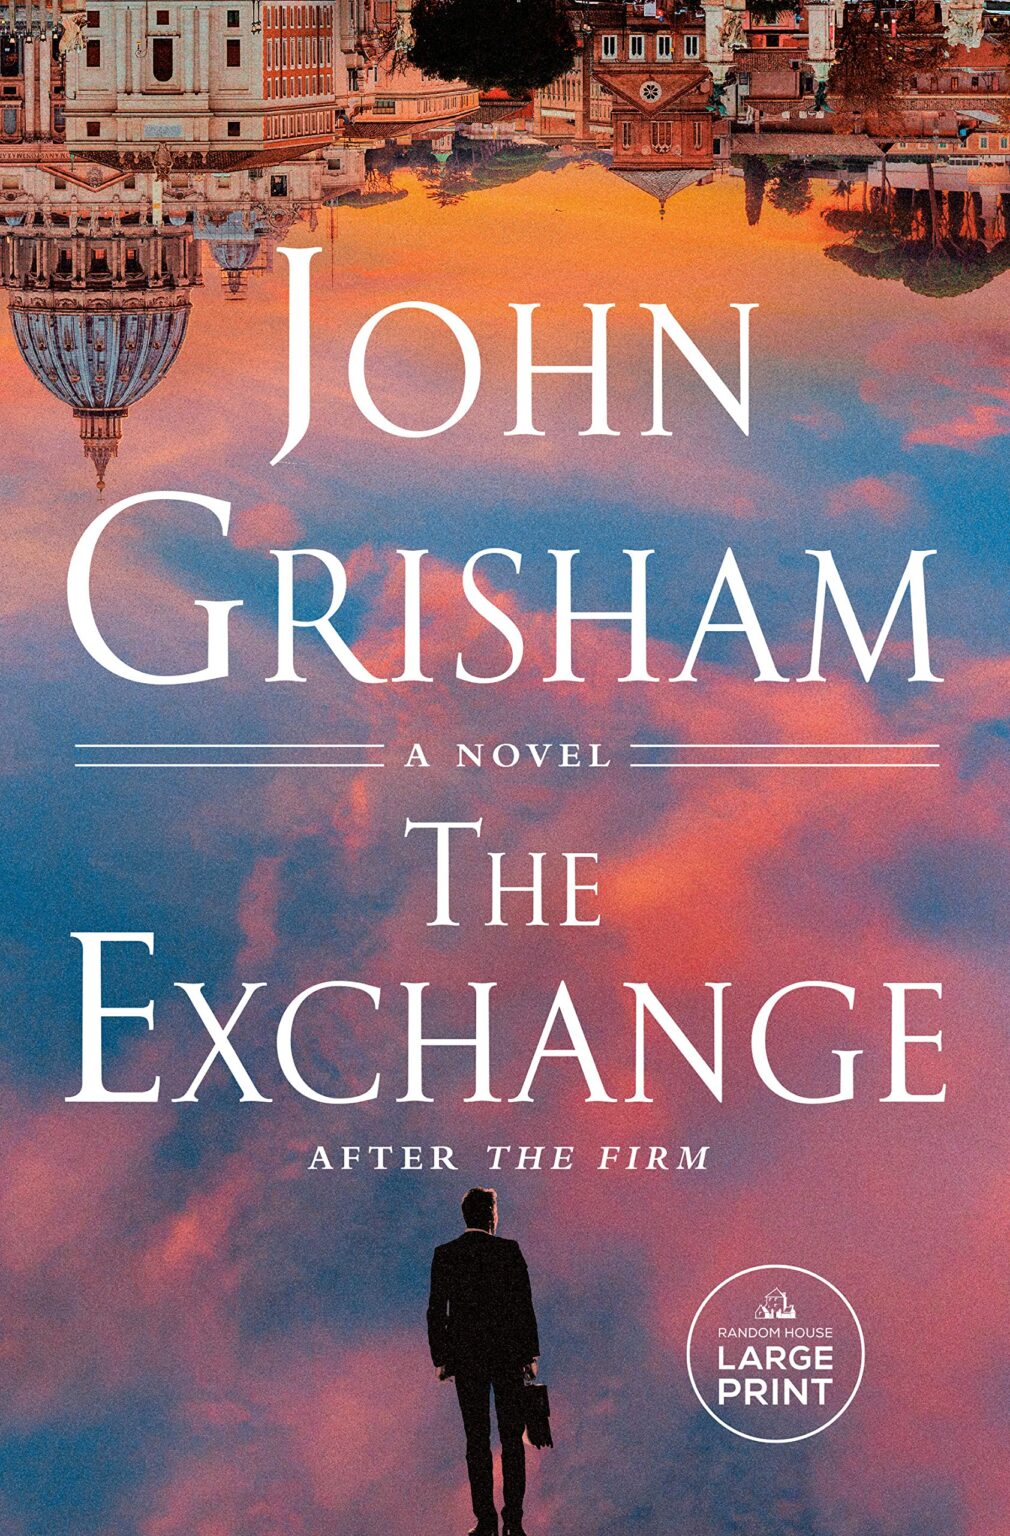 the latest book of john grisham